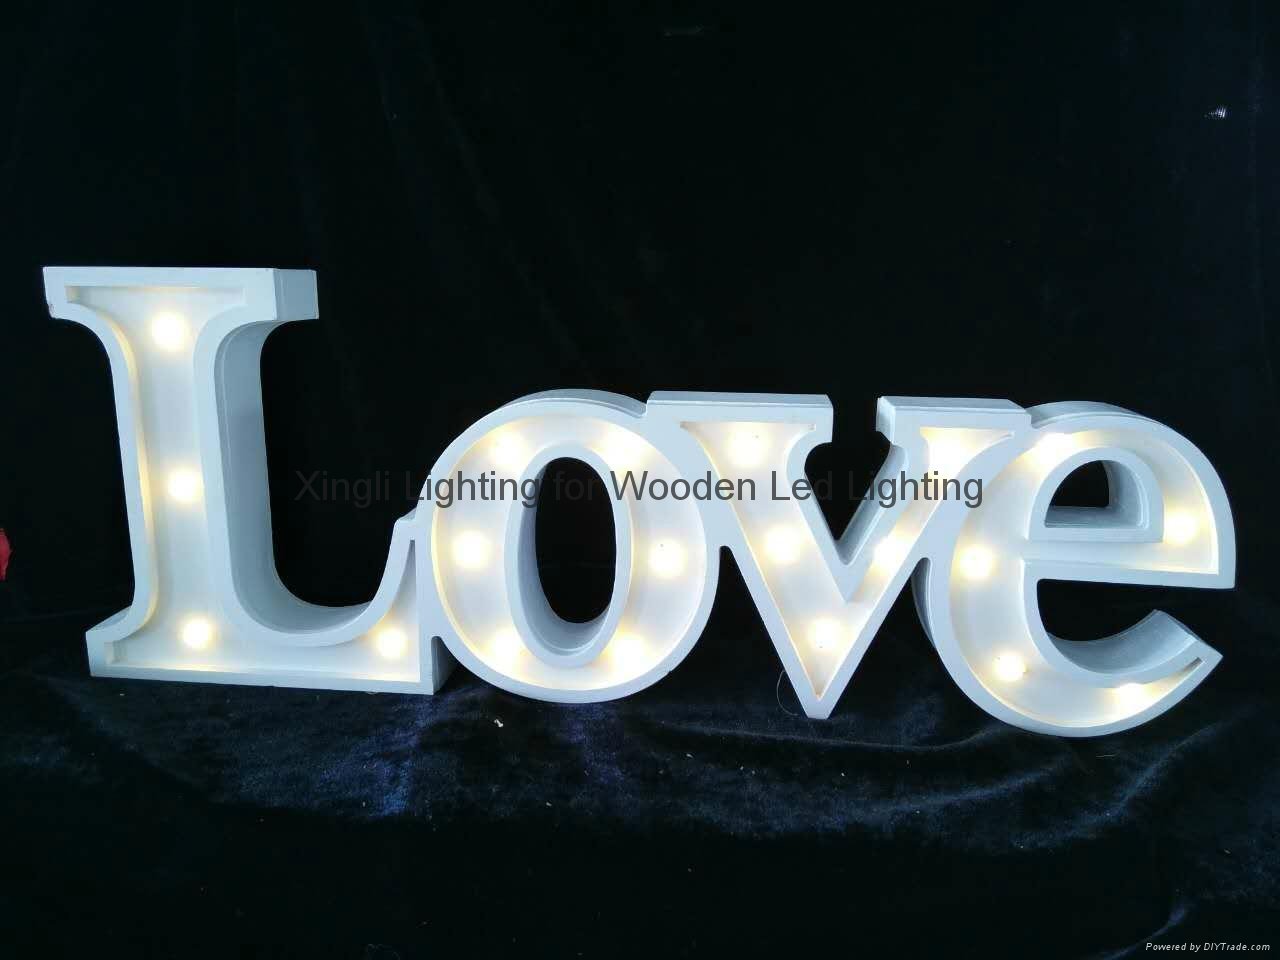 Beautiful letter led lighting wedding decorative wooden night light 3